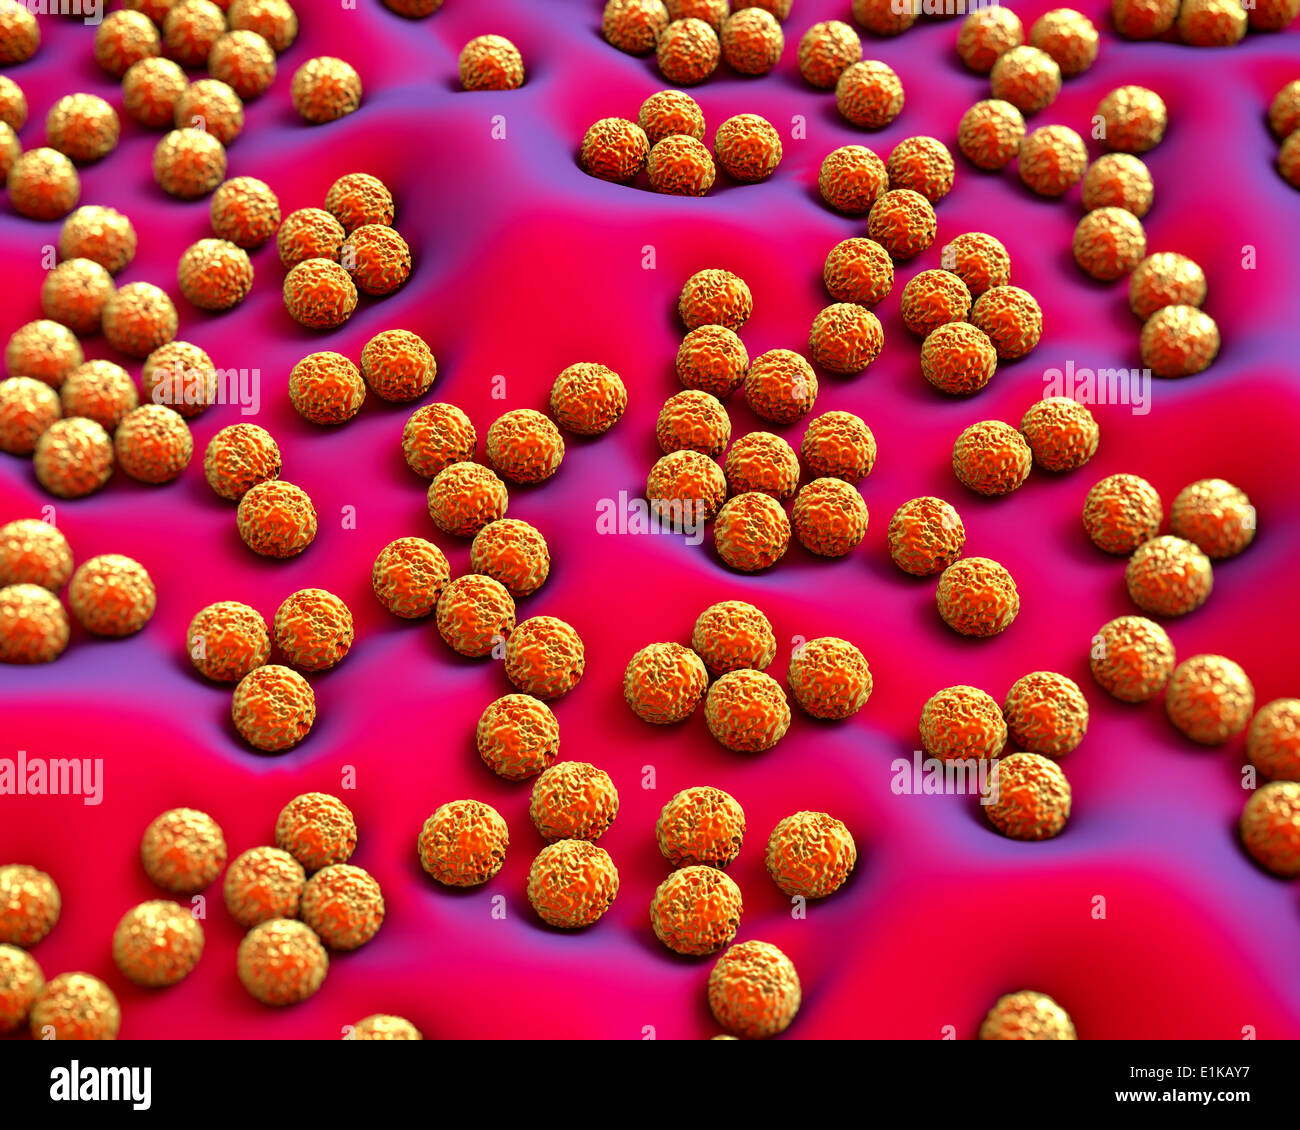 Superbug bacteria computer artwork. Stock Photo